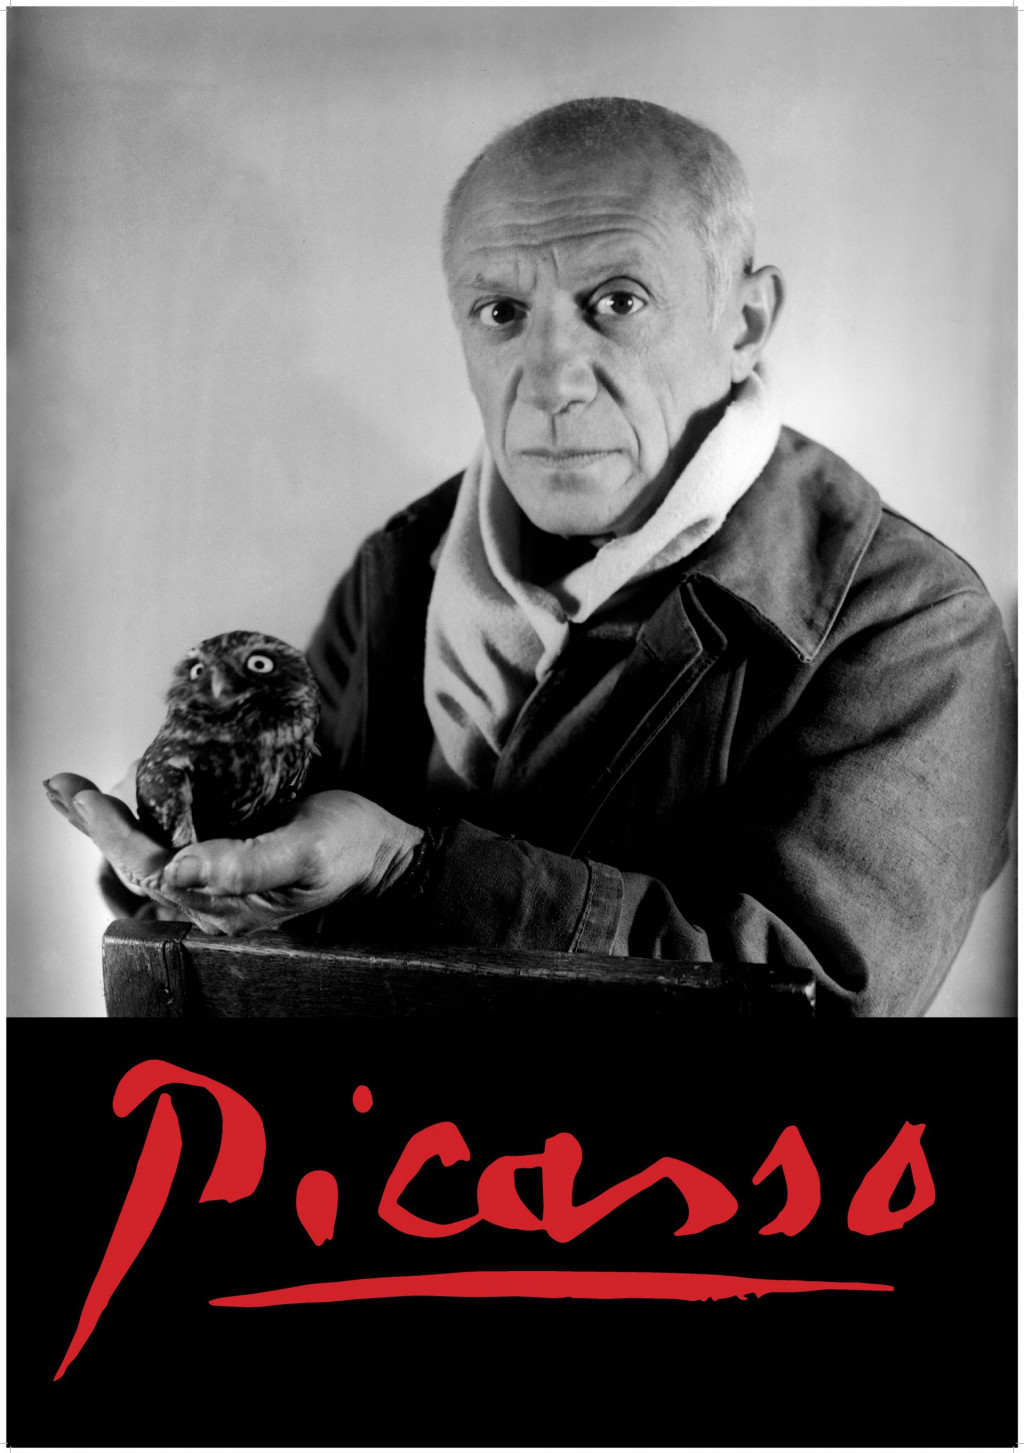 Pablo Picasso exhibition, The Dukes Palace in Zadar, summer events, www.zadarvillas.com